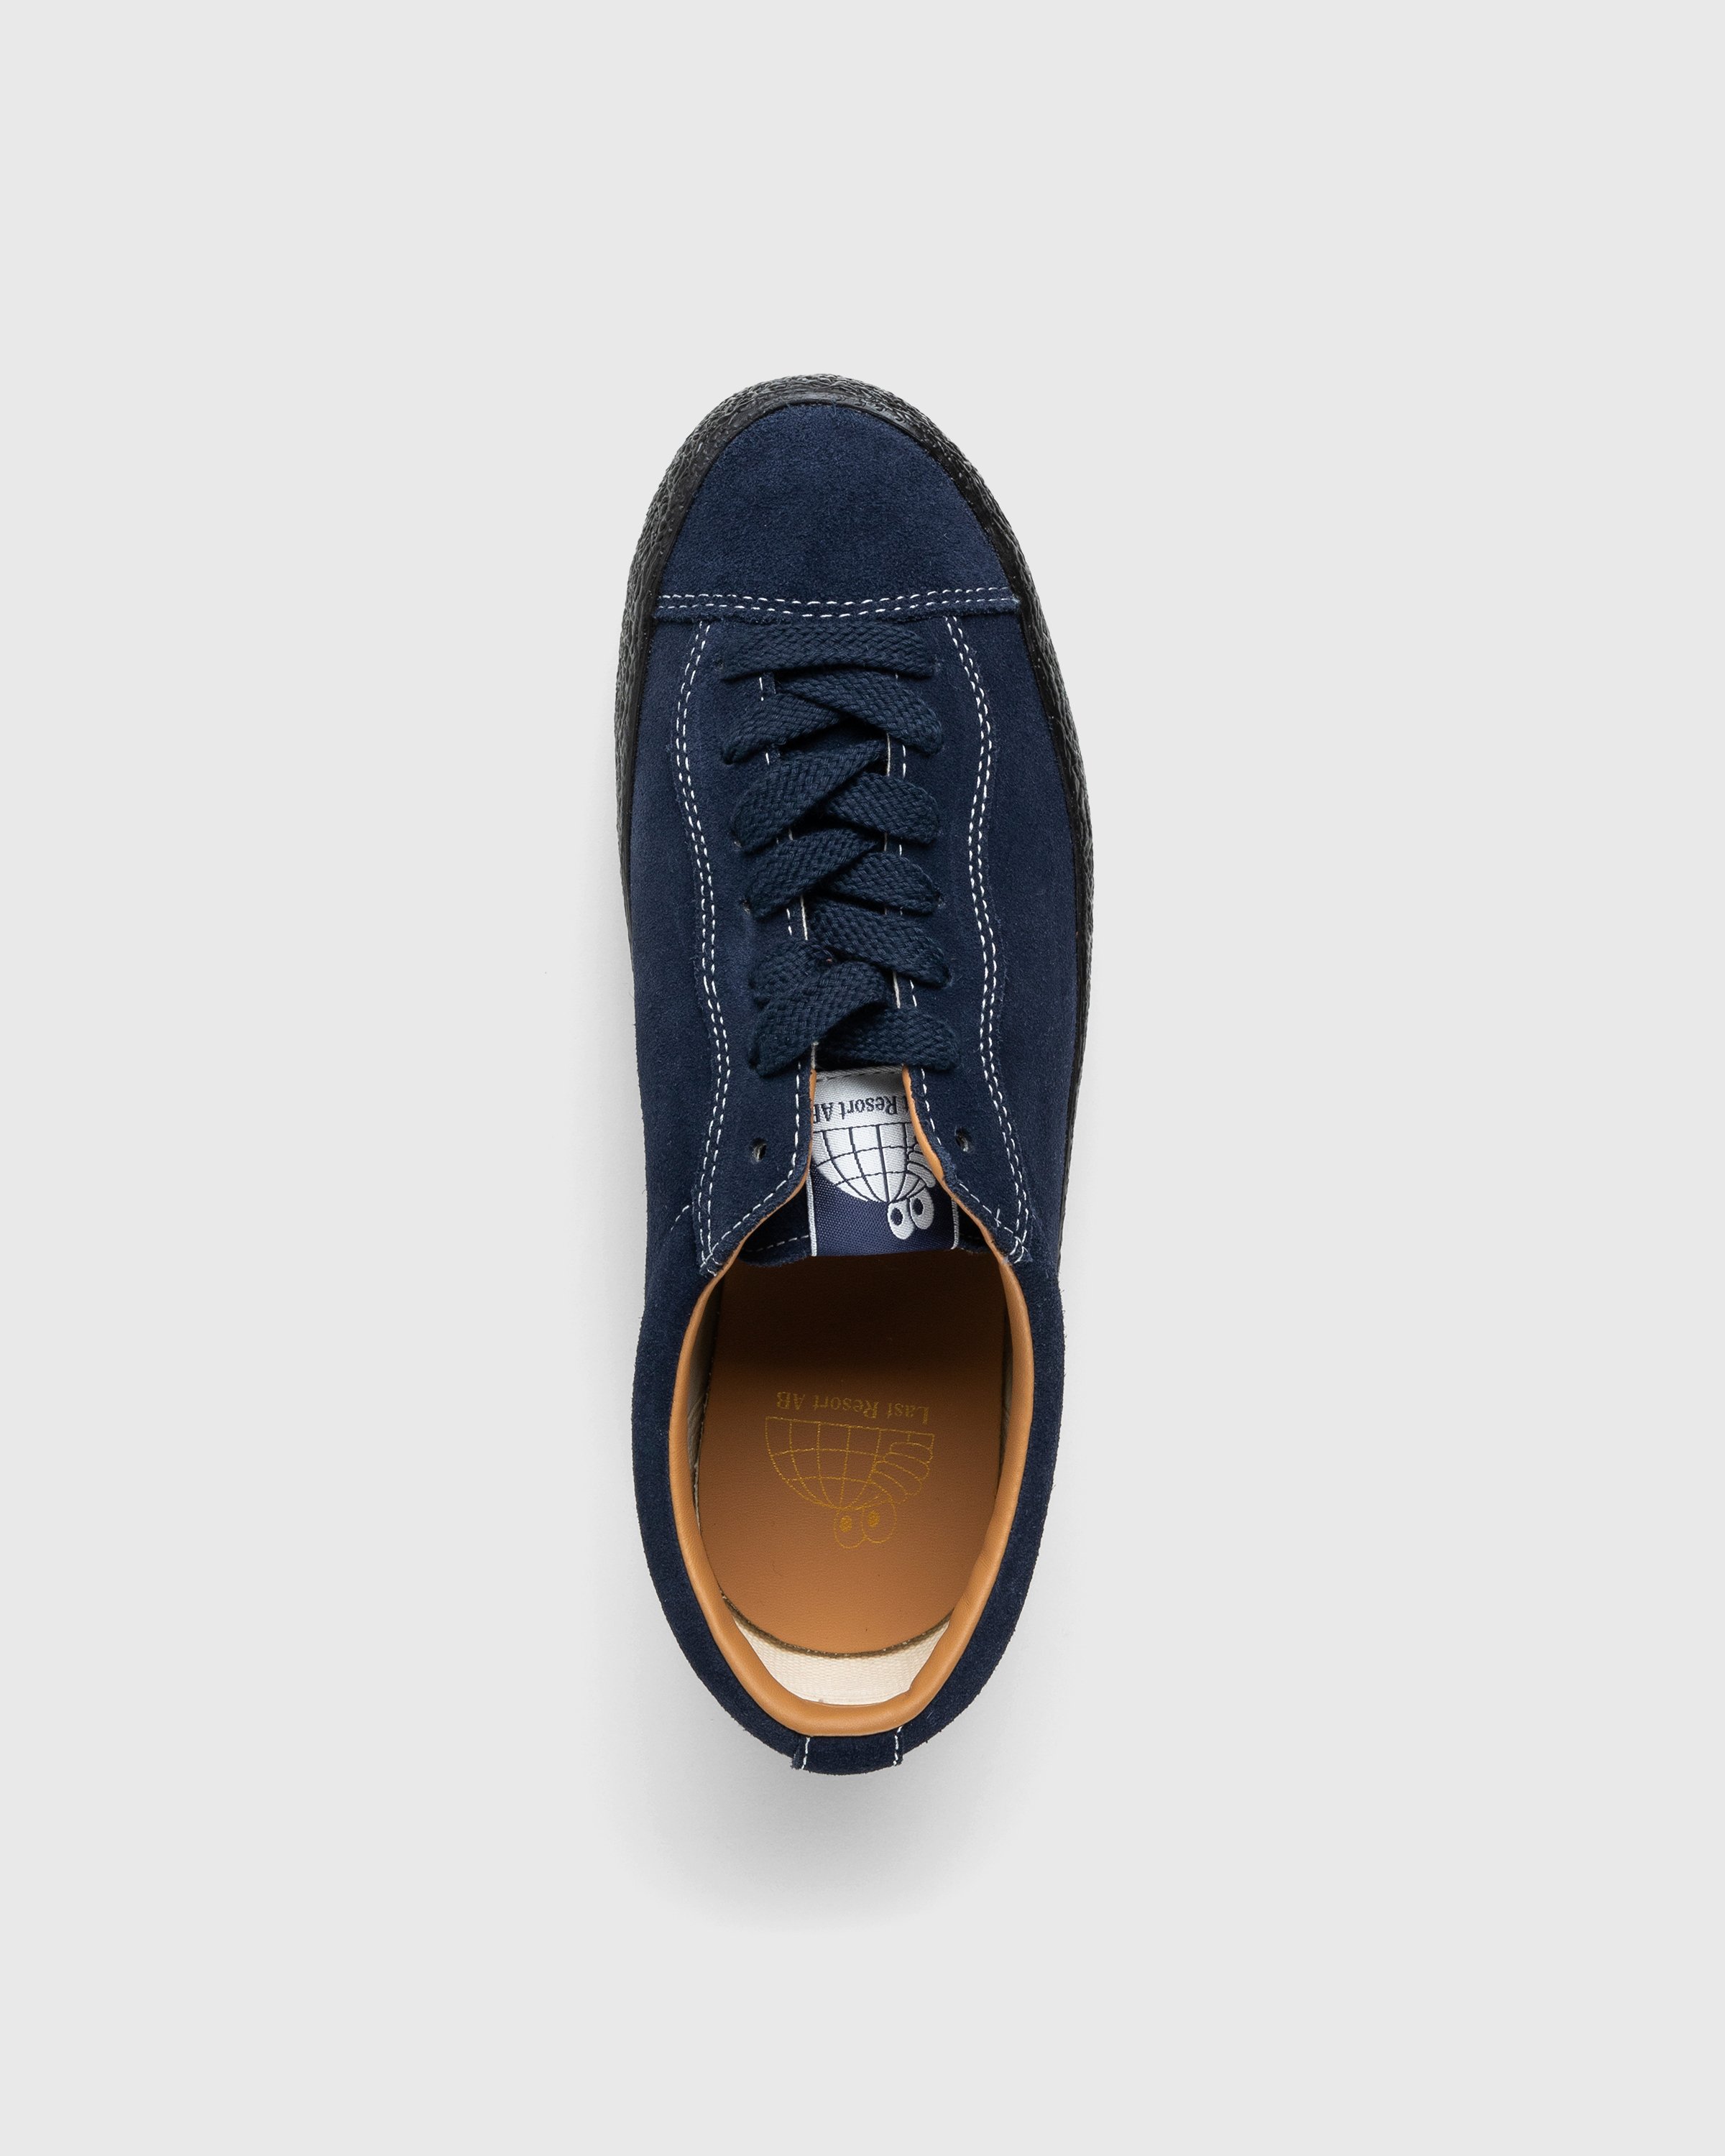 Last Resort AB - VM003-Suede LO Navy/Black - Footwear - Blue - Image 5